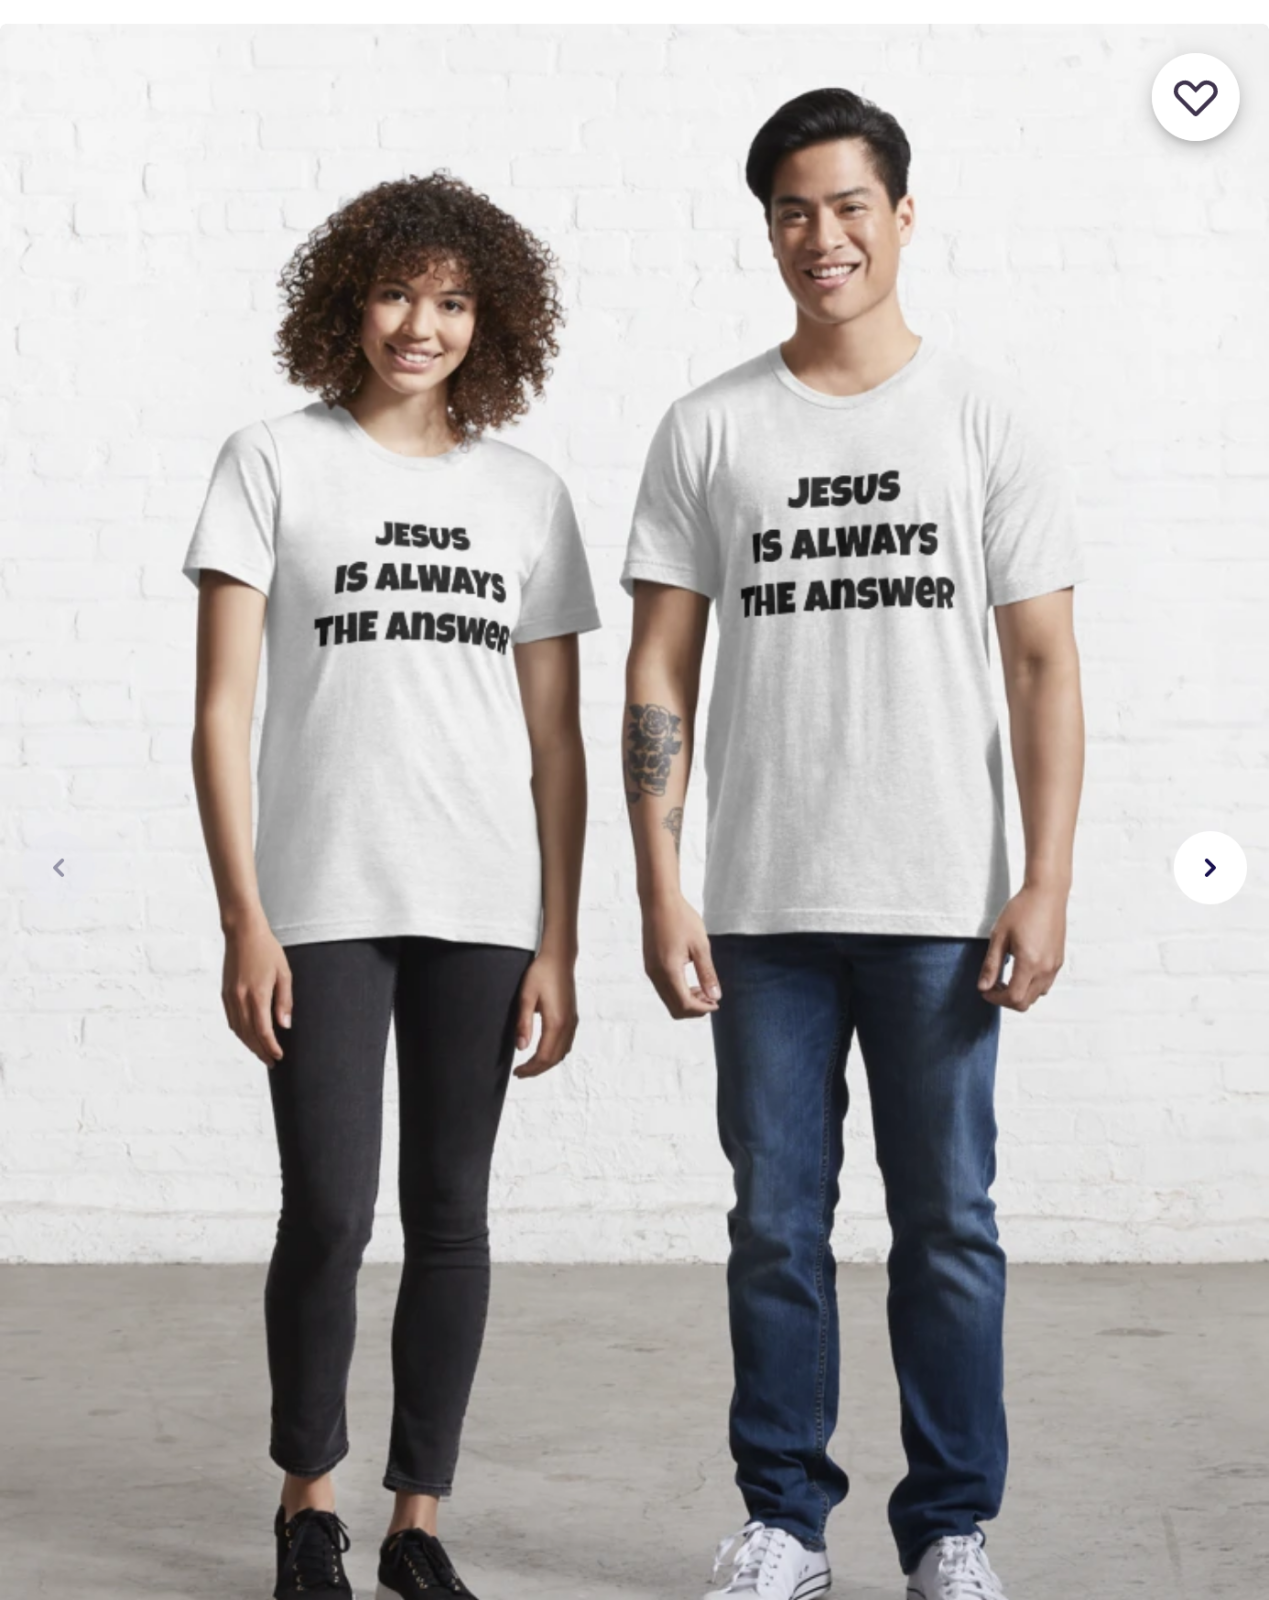 Screenshot 2024-01-17 at 16-27-11 Essential T-Shirt for Sale mit Jesus ist immer die Antwort v...png